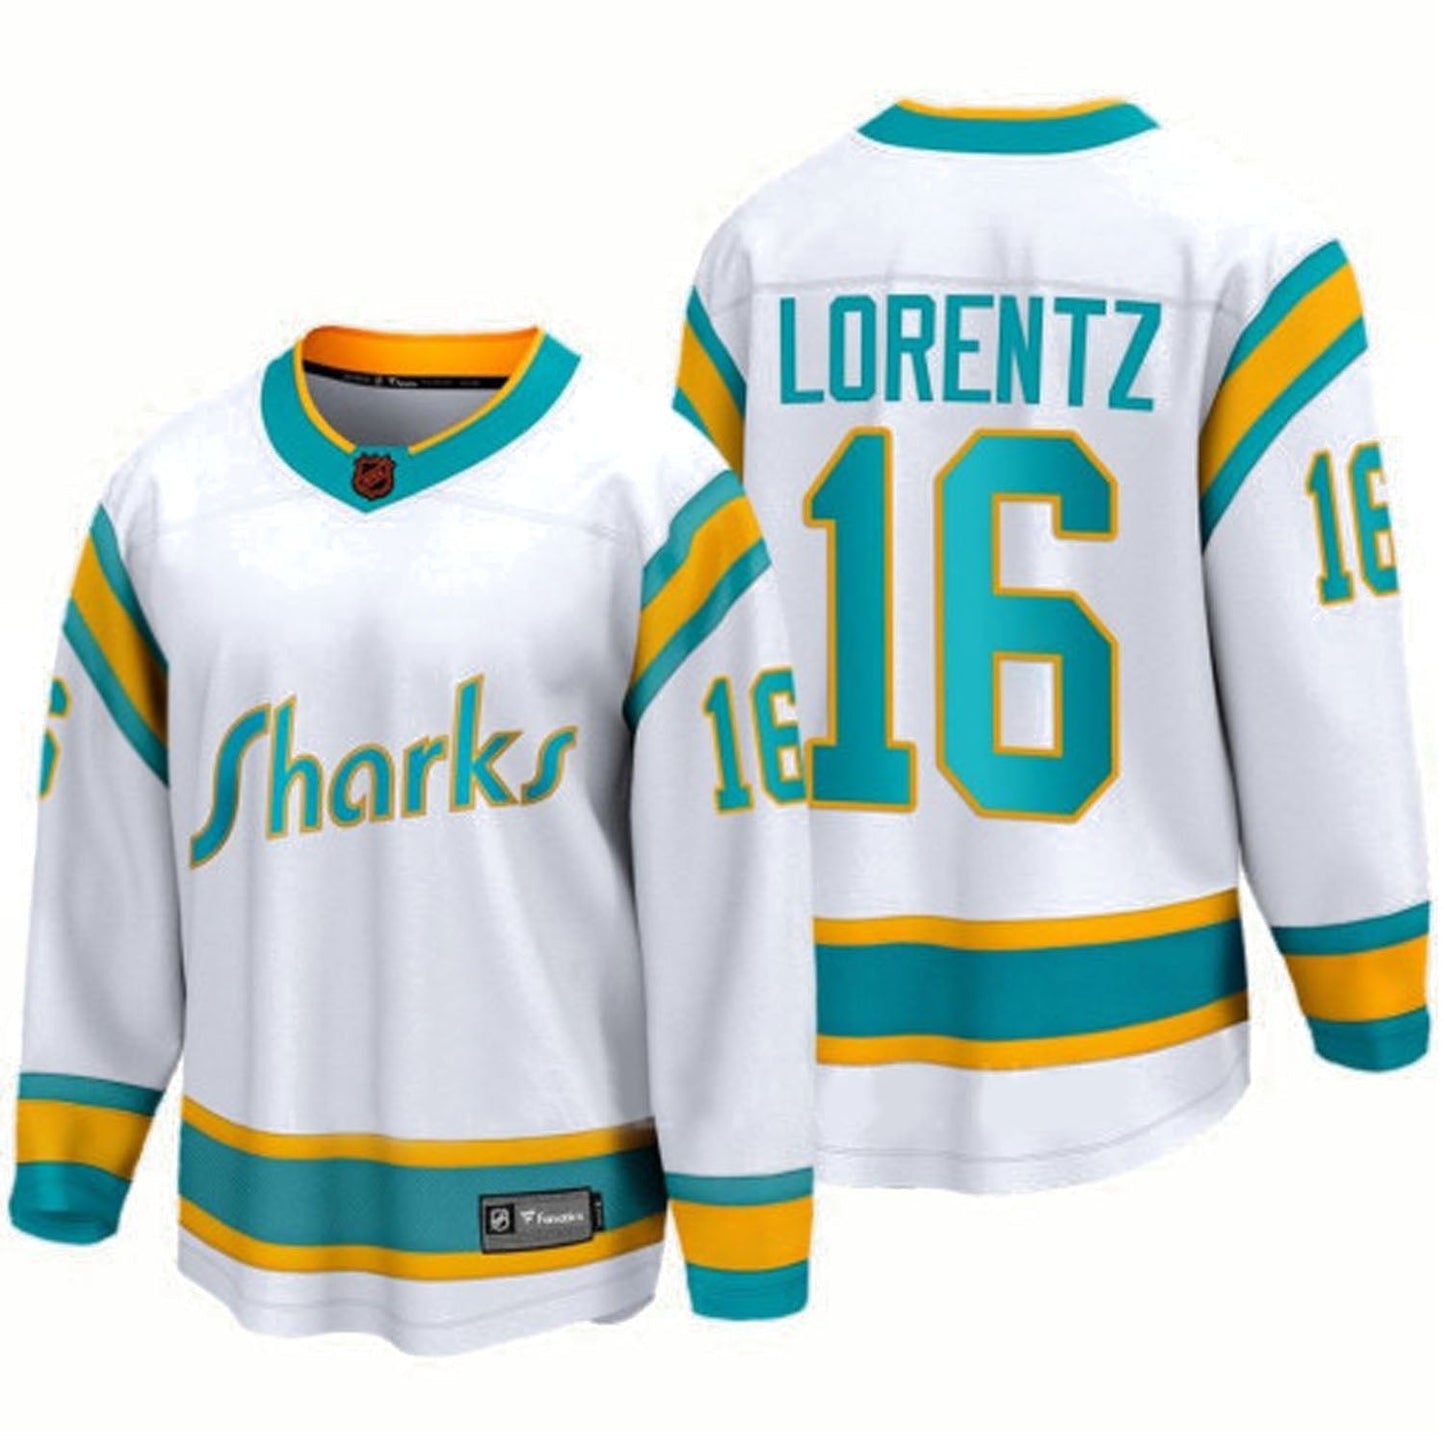 NHL Steven Lorentz #16 San Jose Sharks 16 Jersey